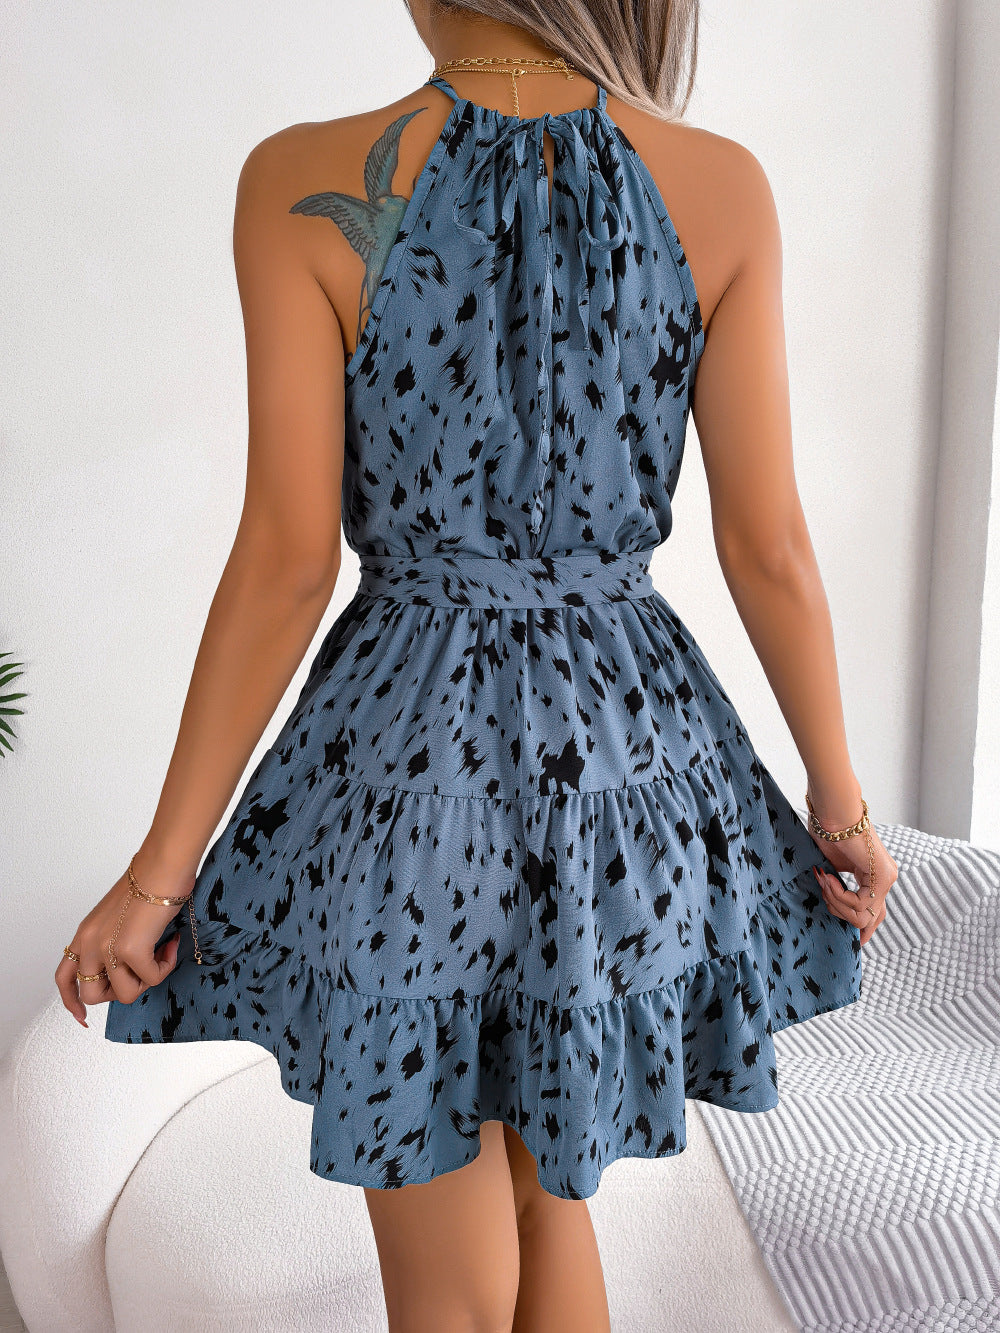 Casual Leopard Print Ruffled Swing Dress Summer Fashion Beach Dress Women